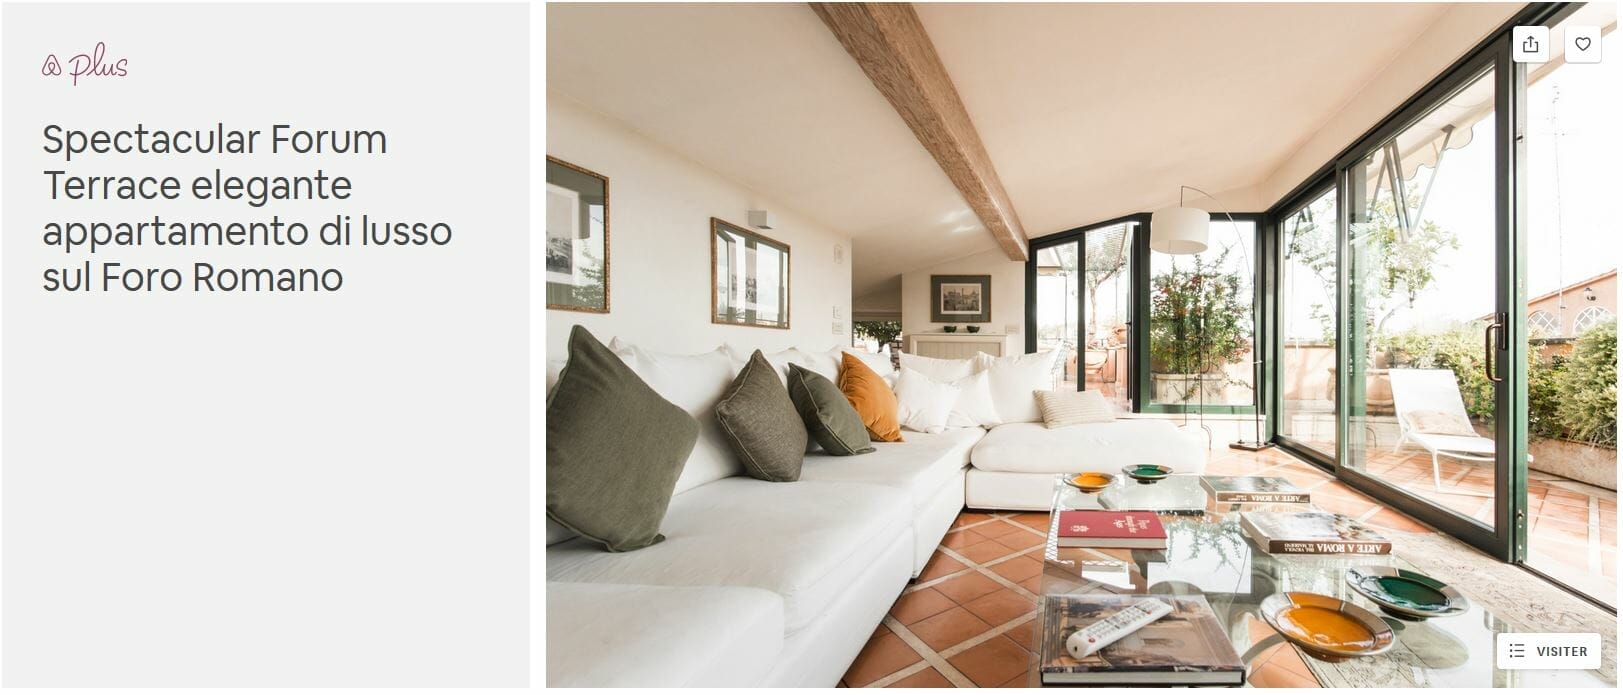 best airbnbs rome Spectacular Forum Terrace